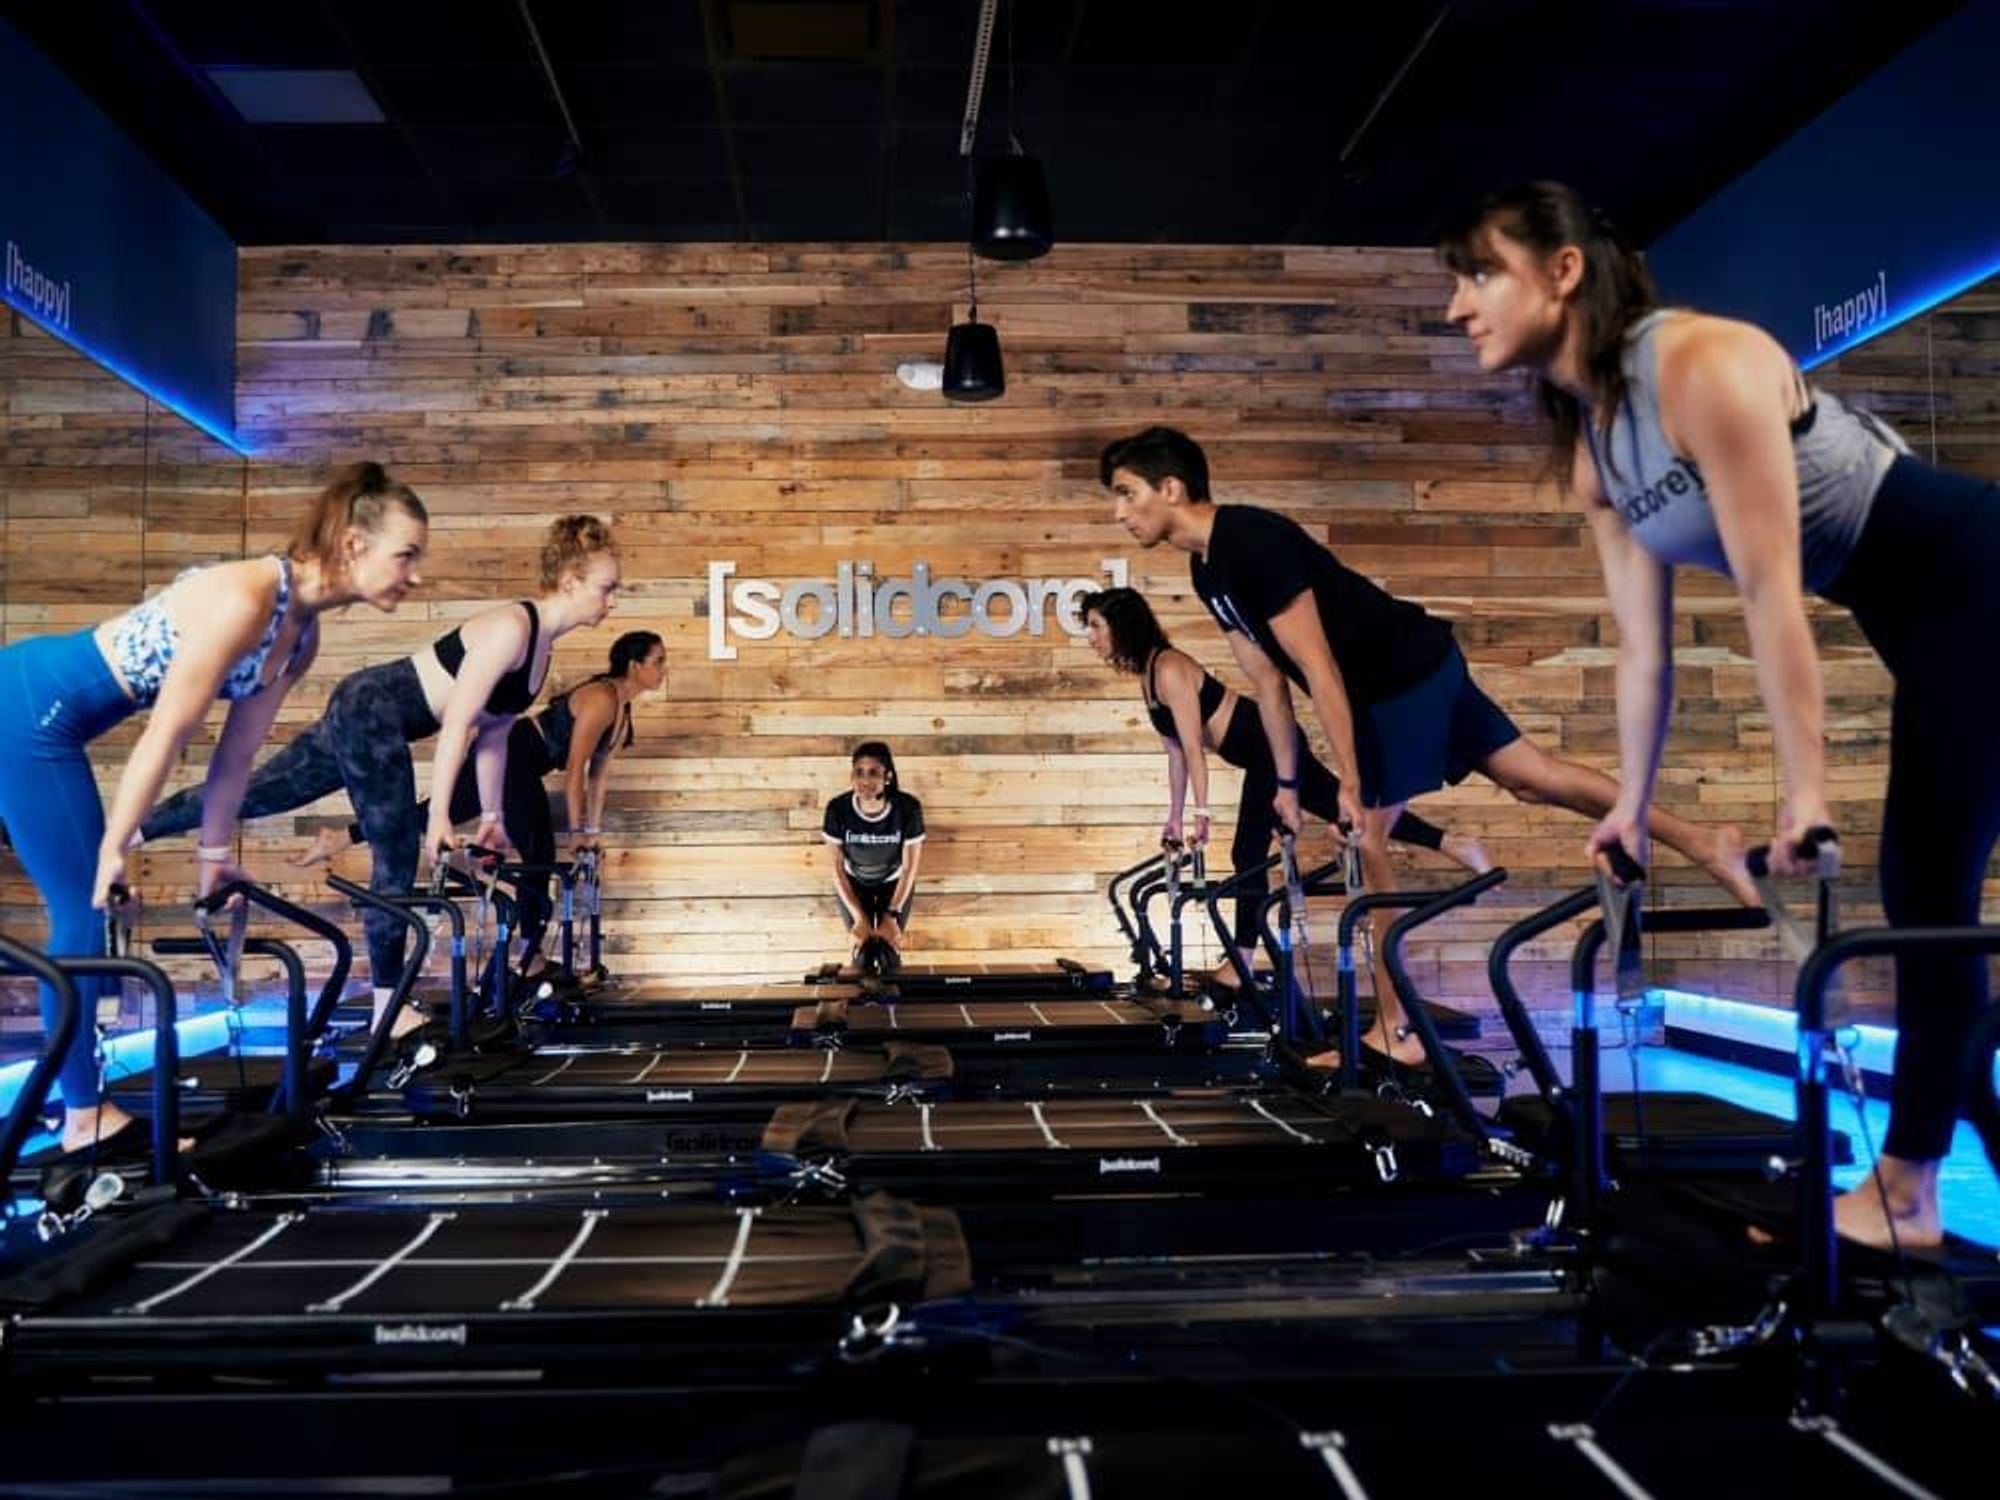 Solidcore: New Boutique Fitness Studio Coming to Chestnut Street -  Philadelphia Magazine